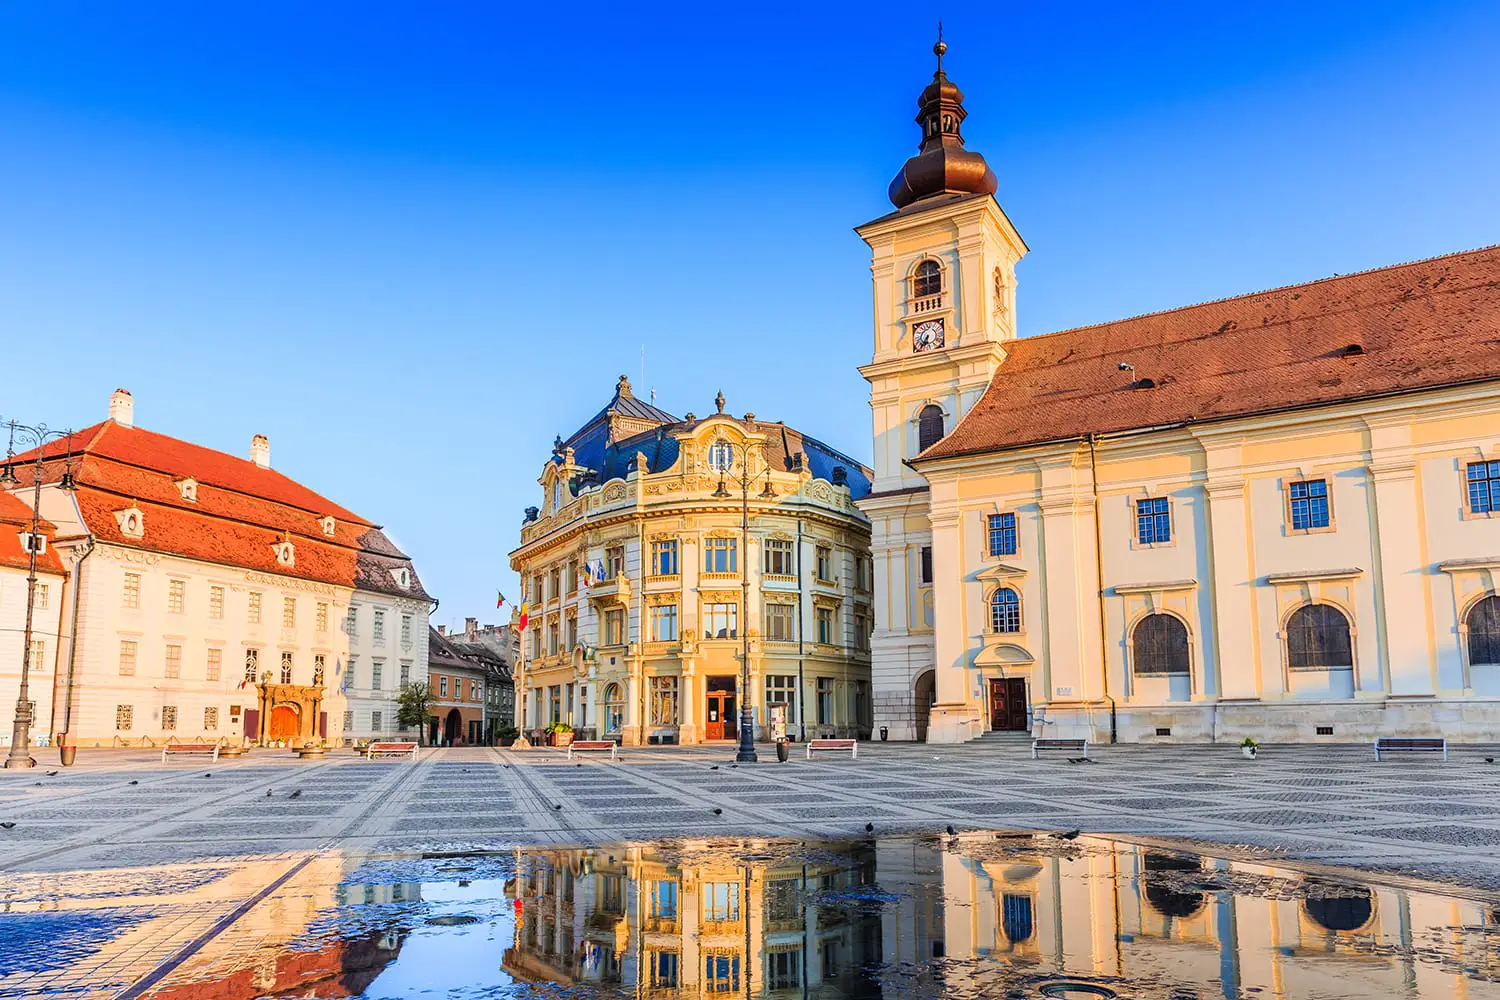 City Hall and Brukenthal palace in Sibiu, Romania